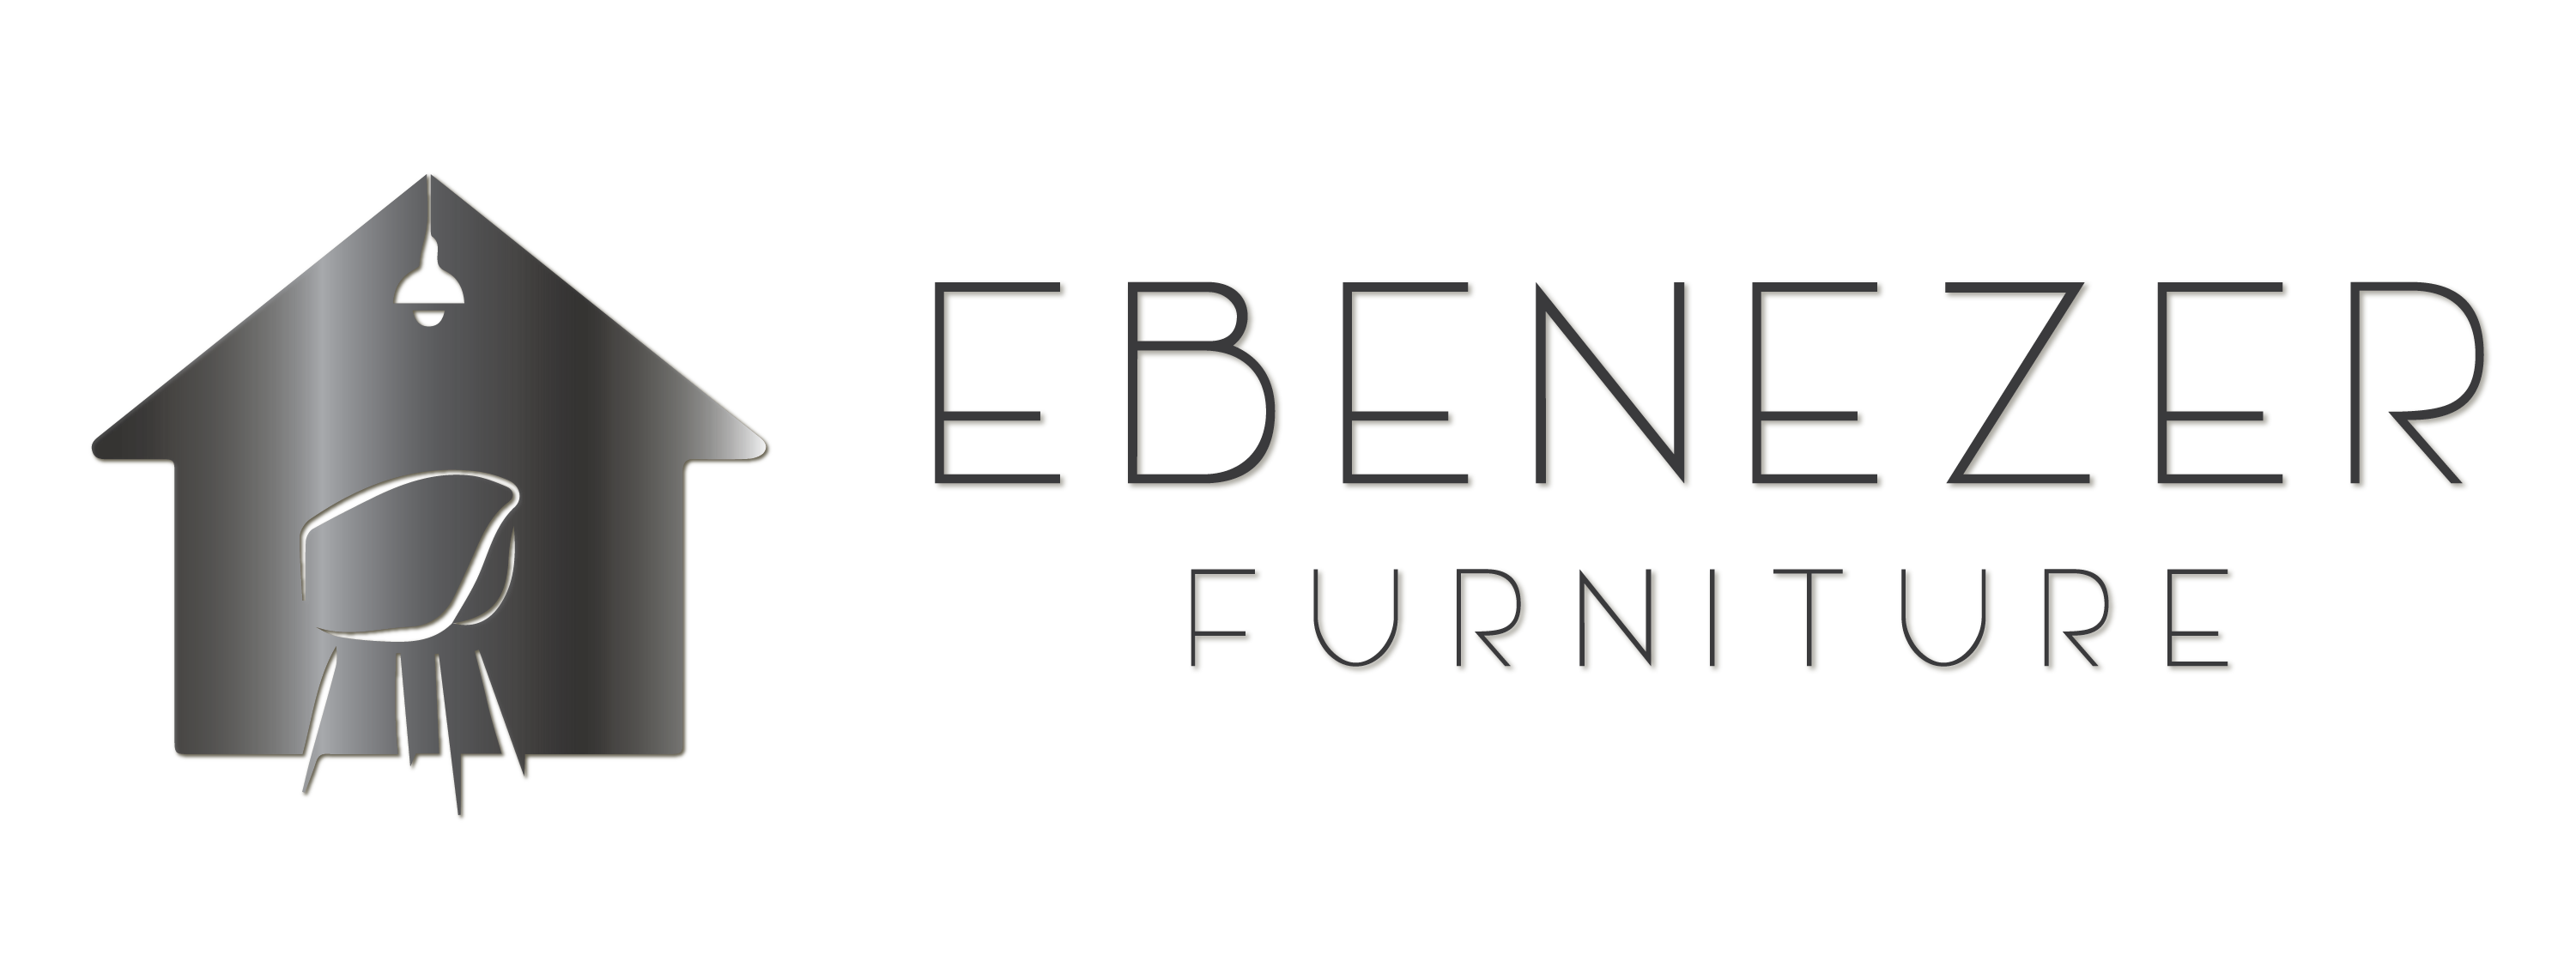 Ebenezer Furniture Logo